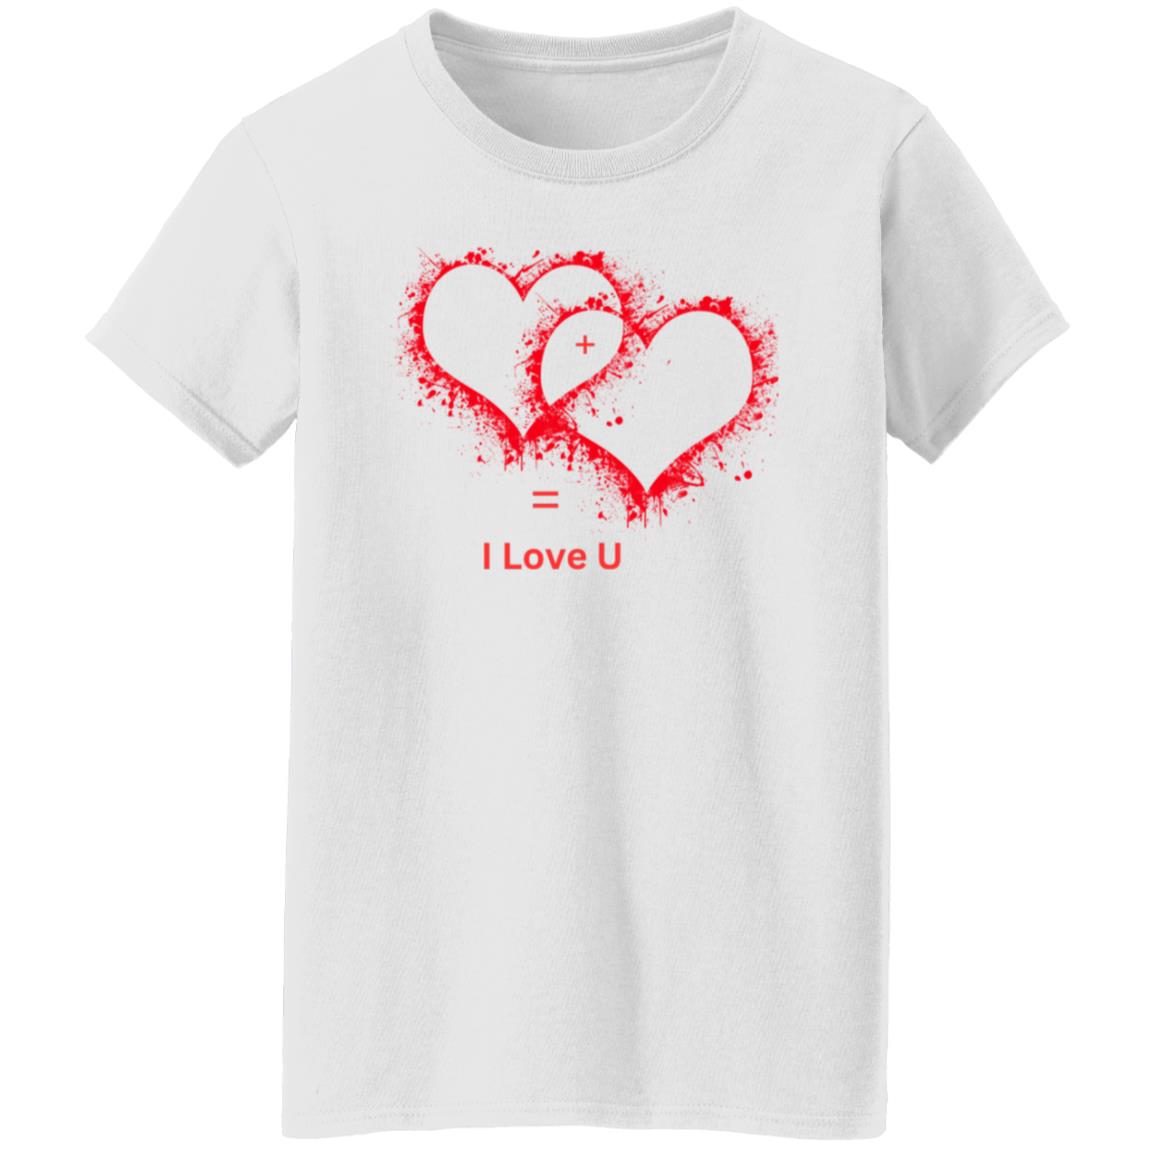 Heart + Heart = I Love U T-Shirt